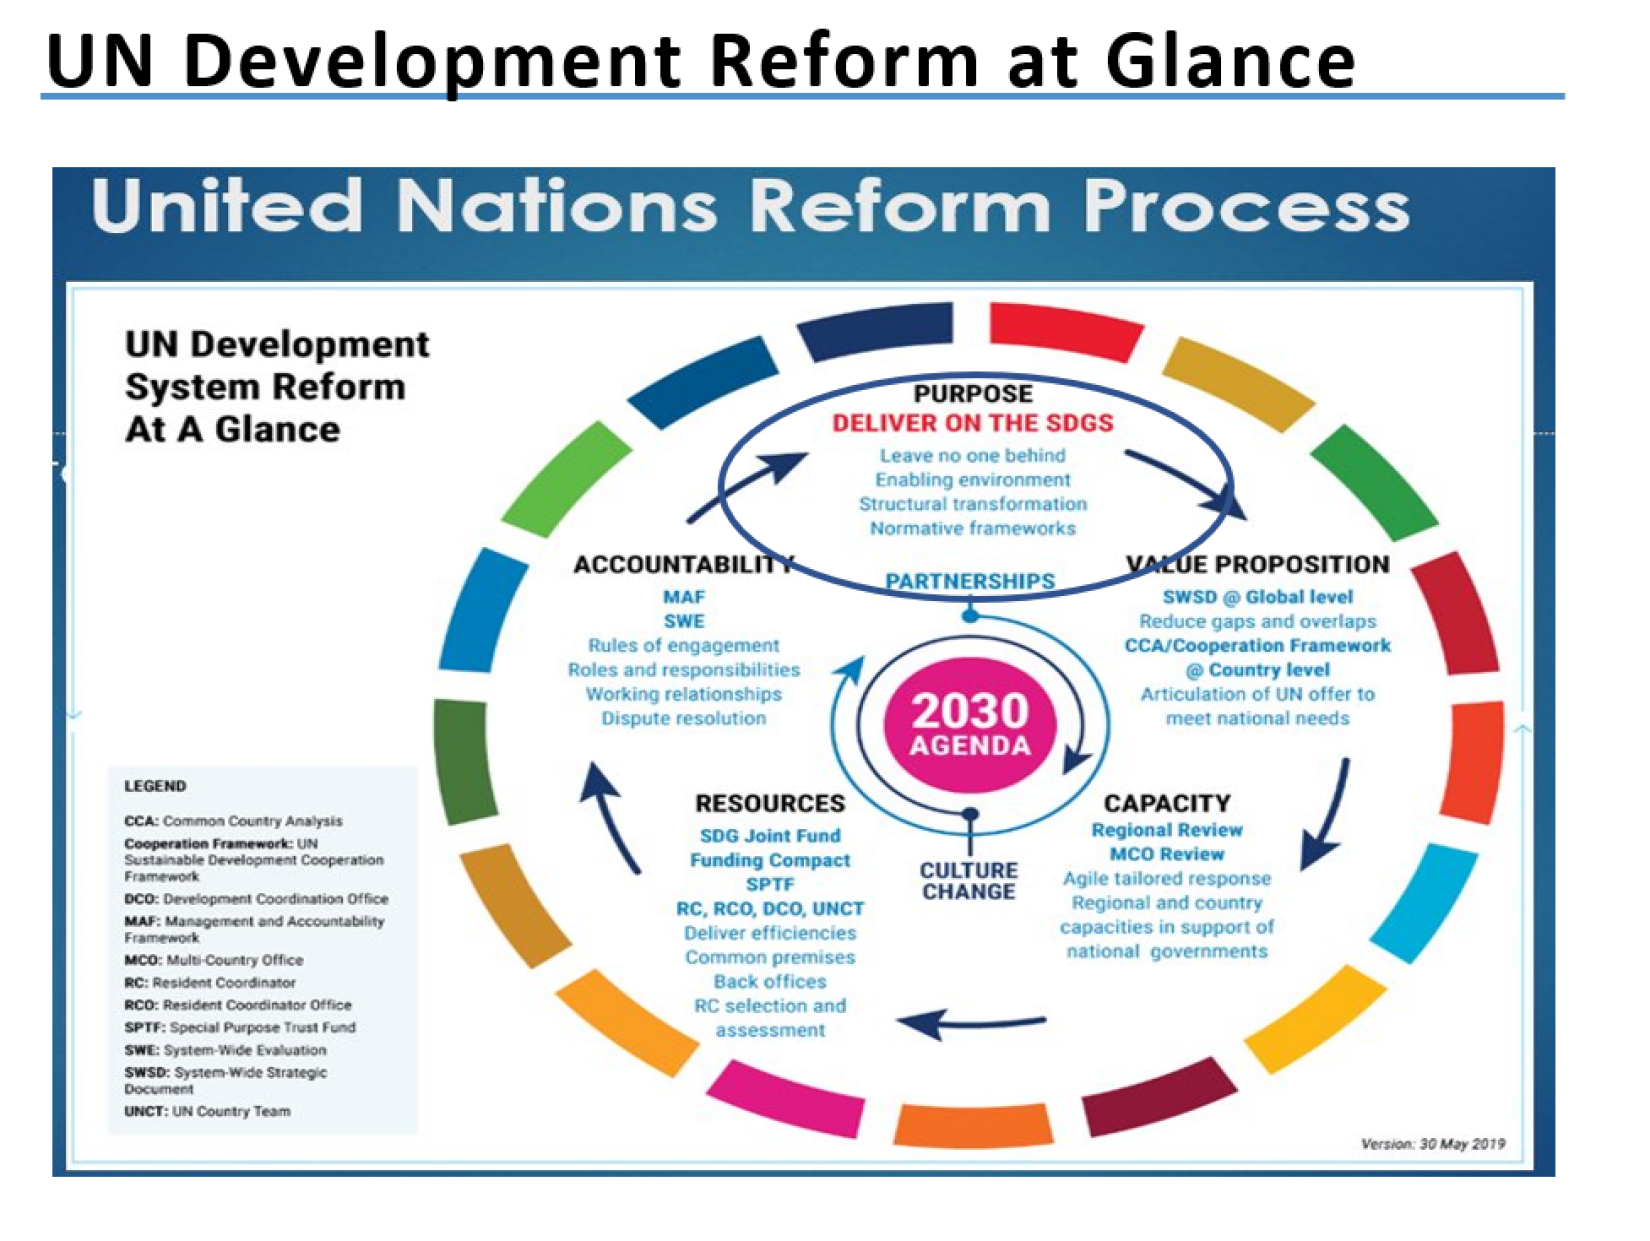 UN Development System Reform at a Glance